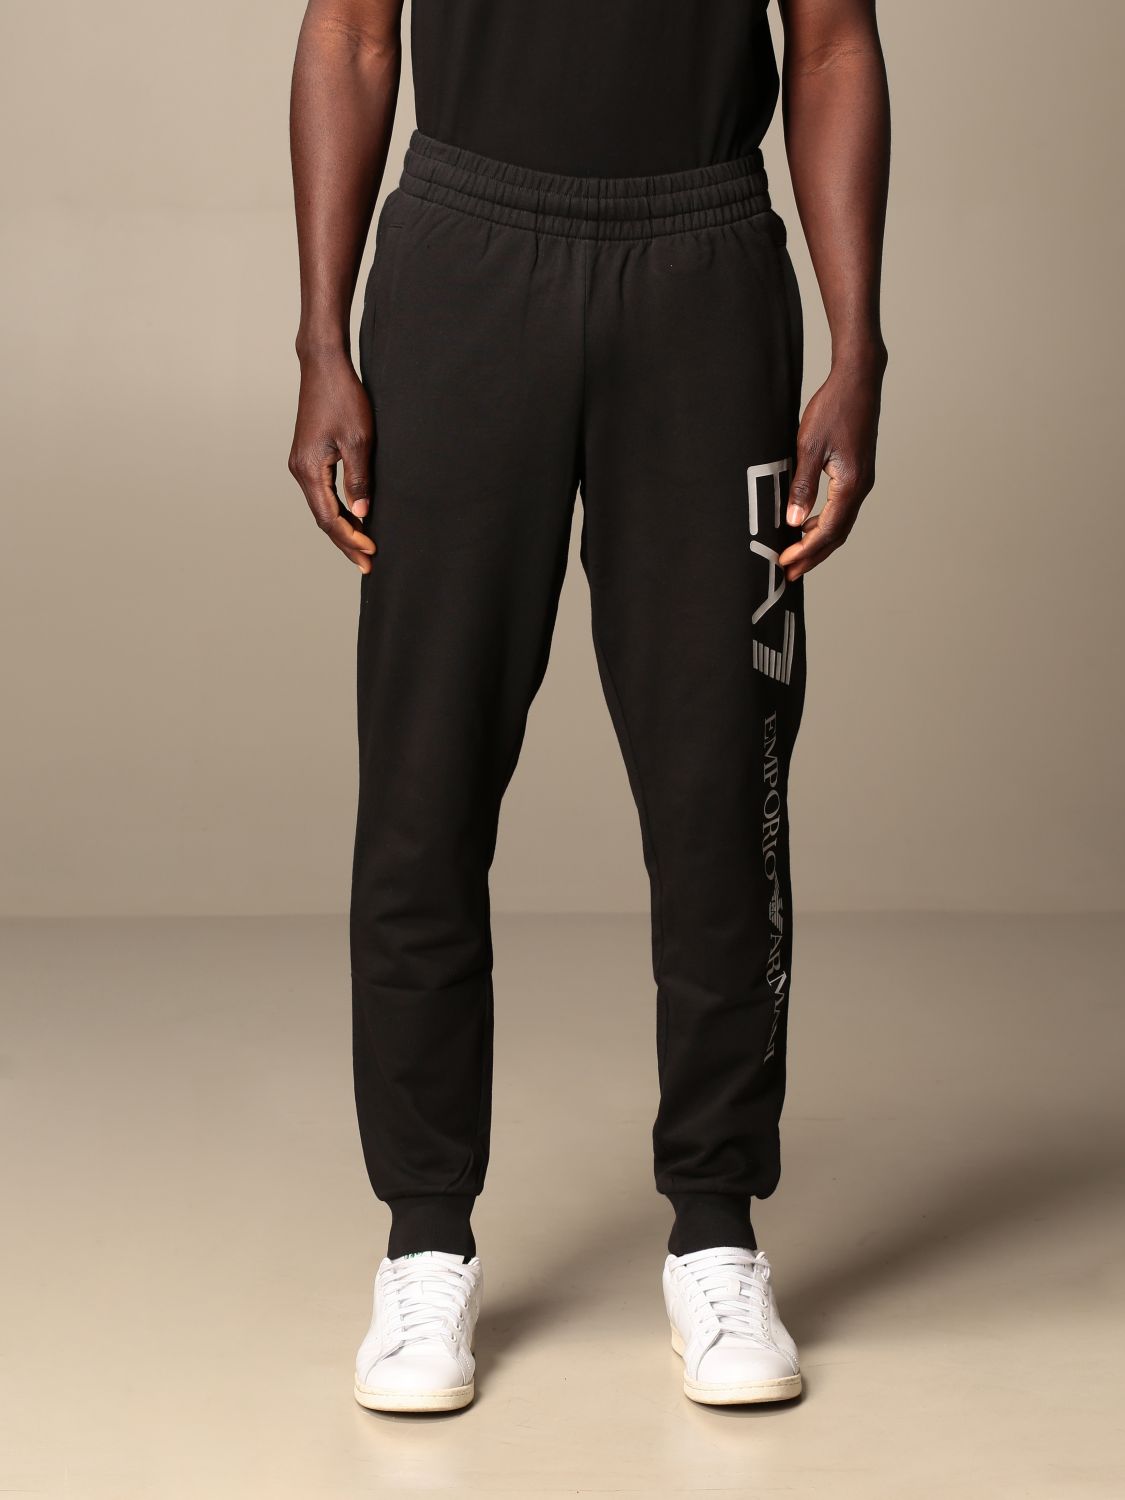 EA7: stretch cotton jogging trousers with logo - Black | Ea7 pants ...